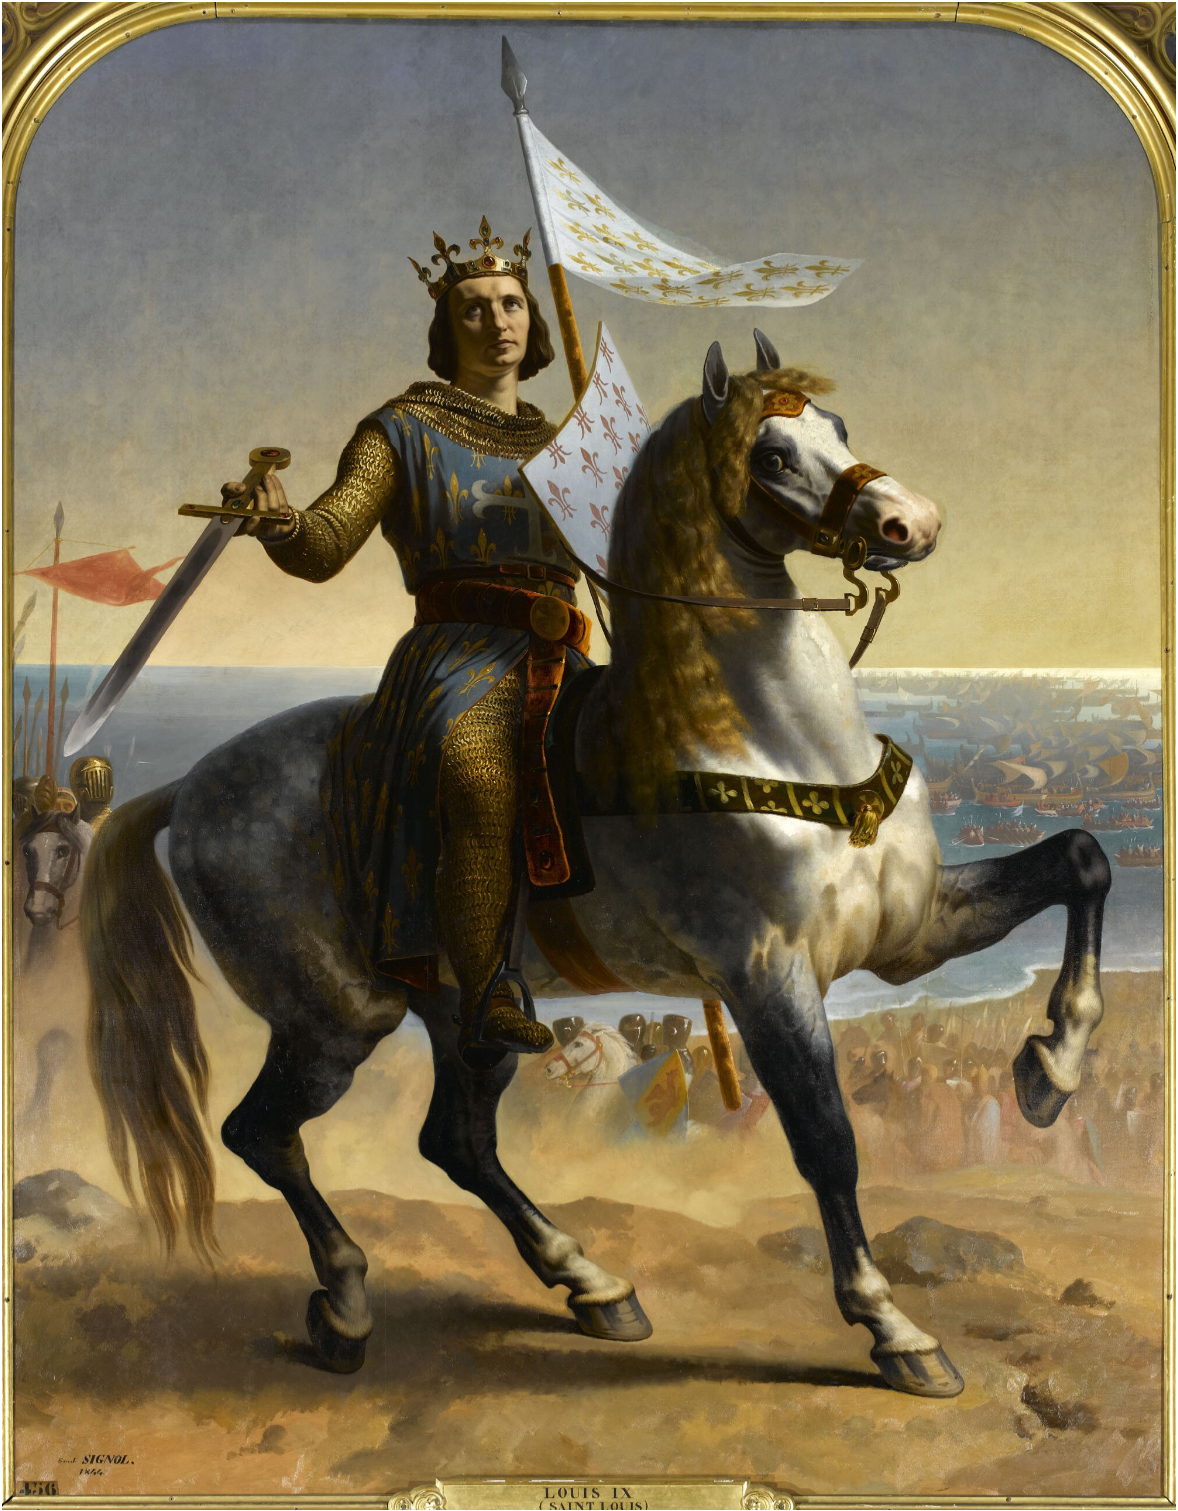 Saint Louis IX, Crusader King of France